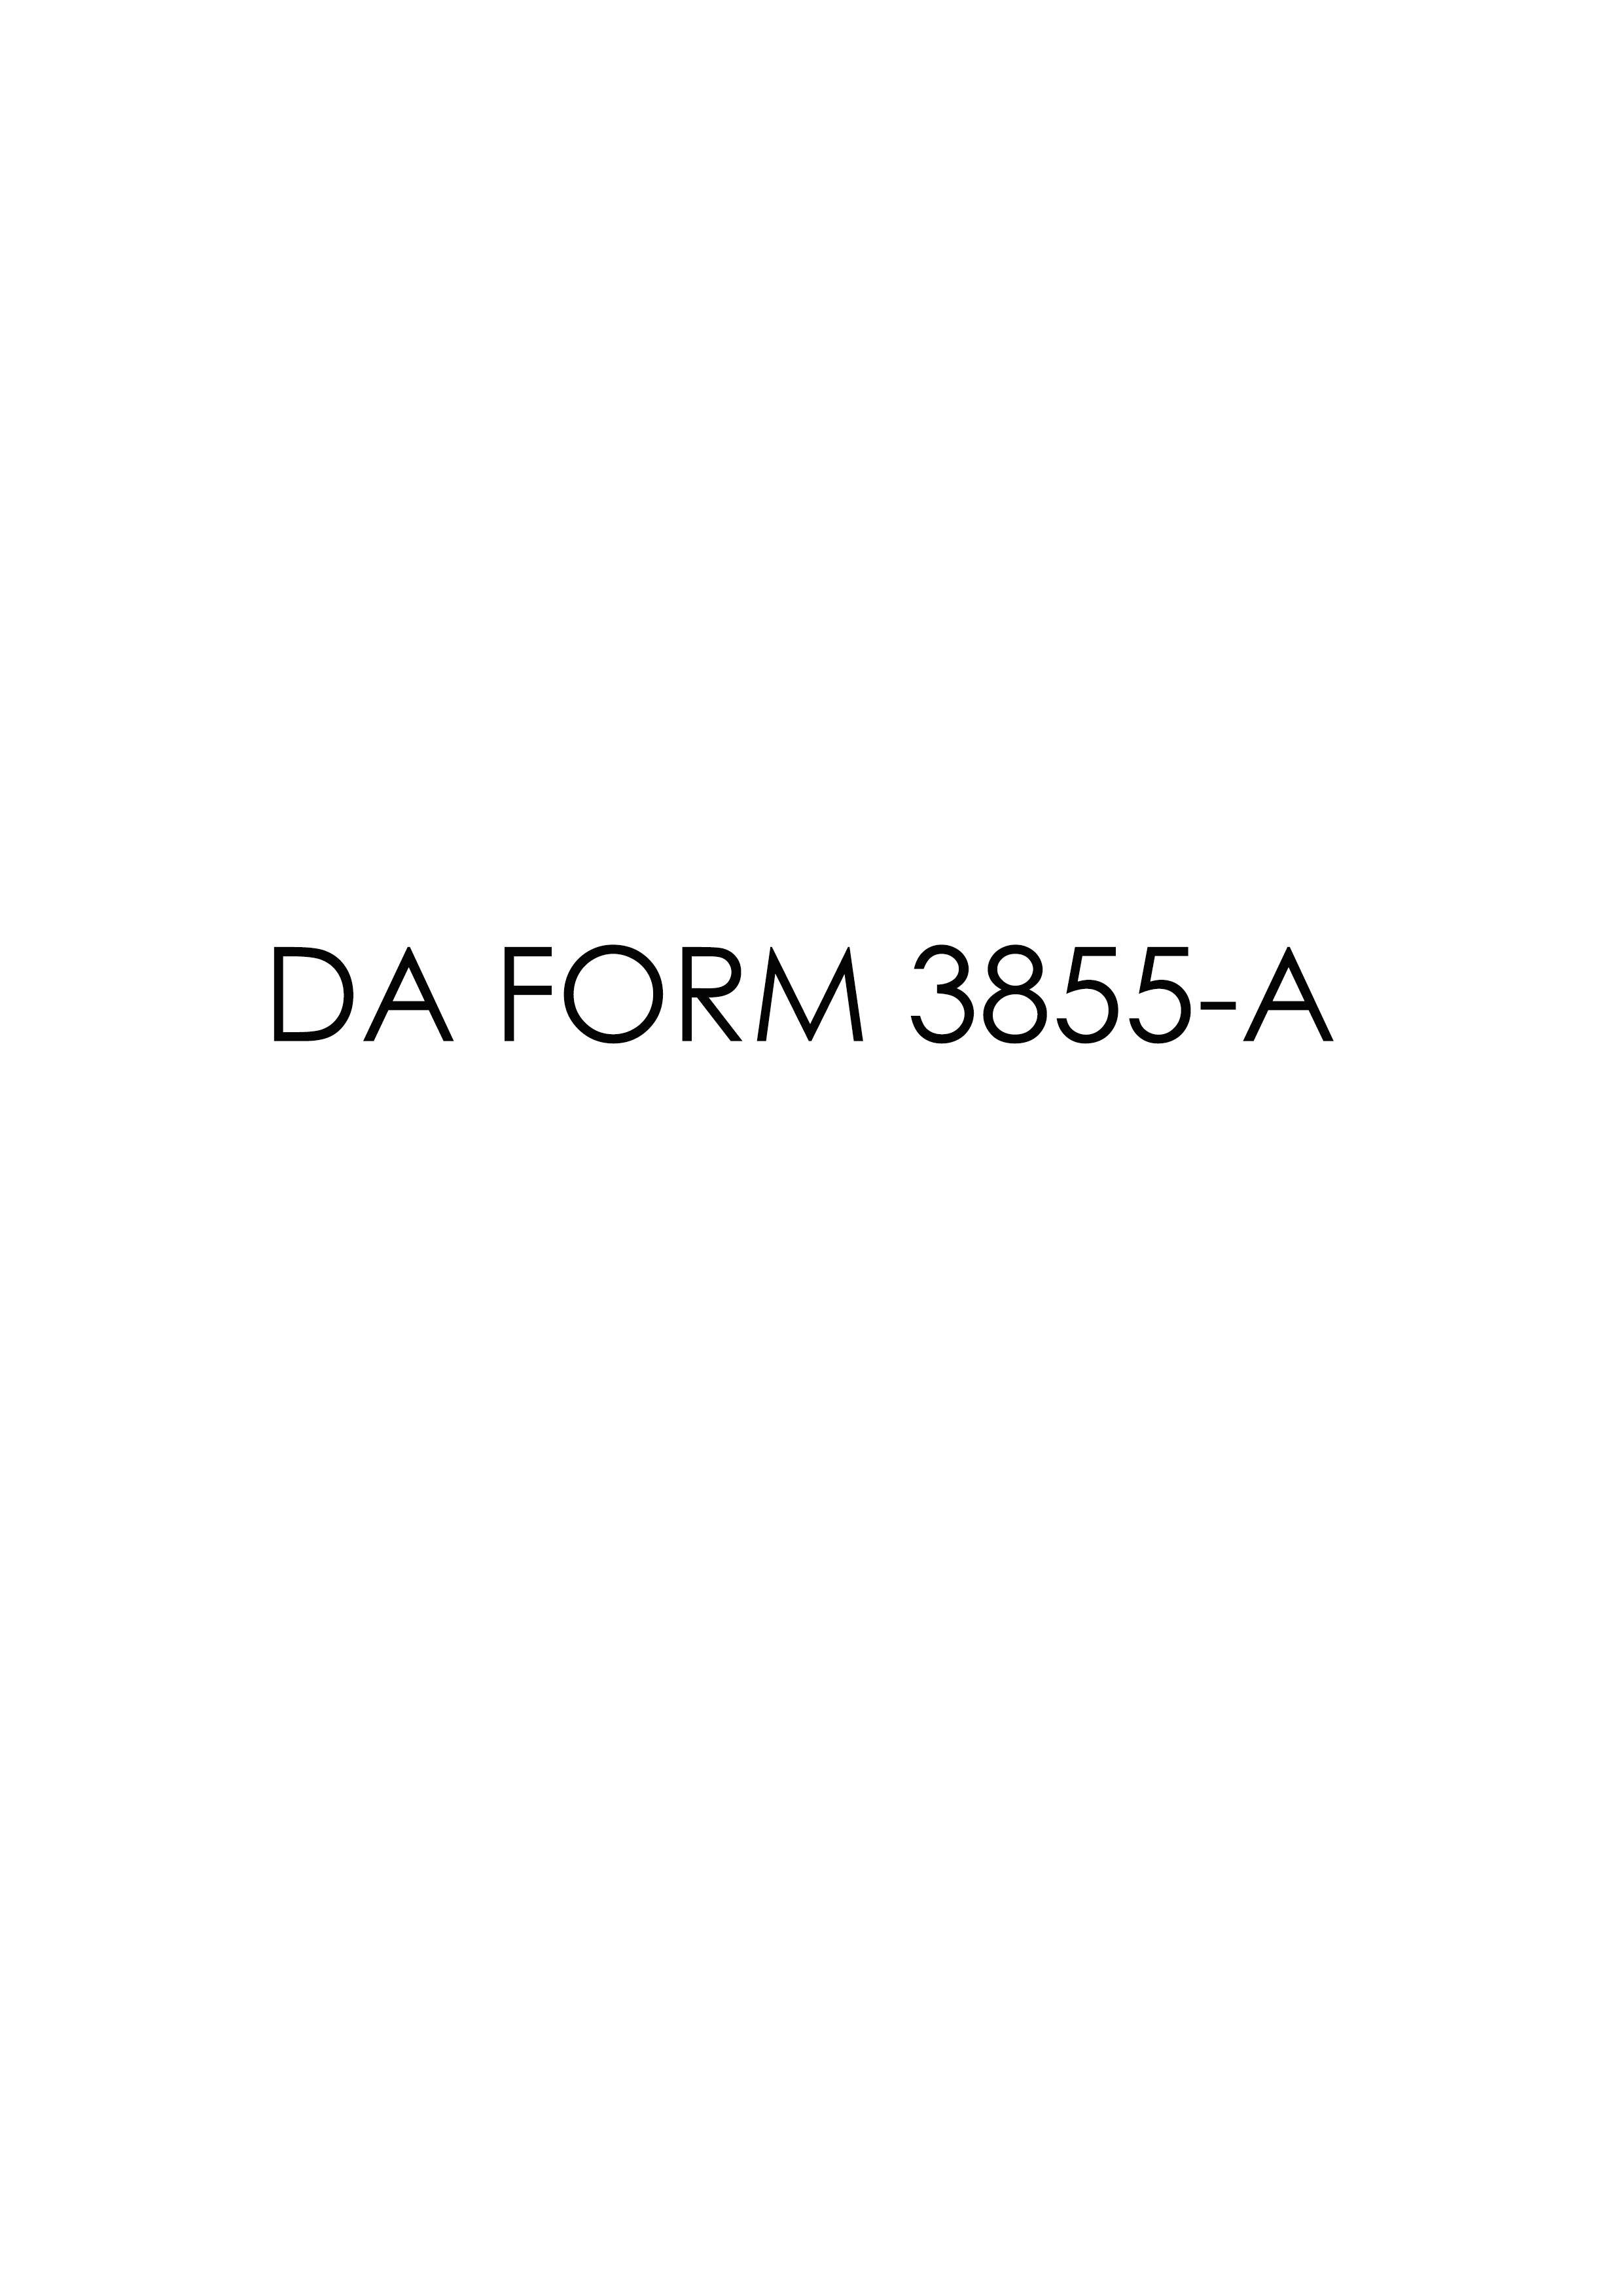 da Form 3855-A fillable